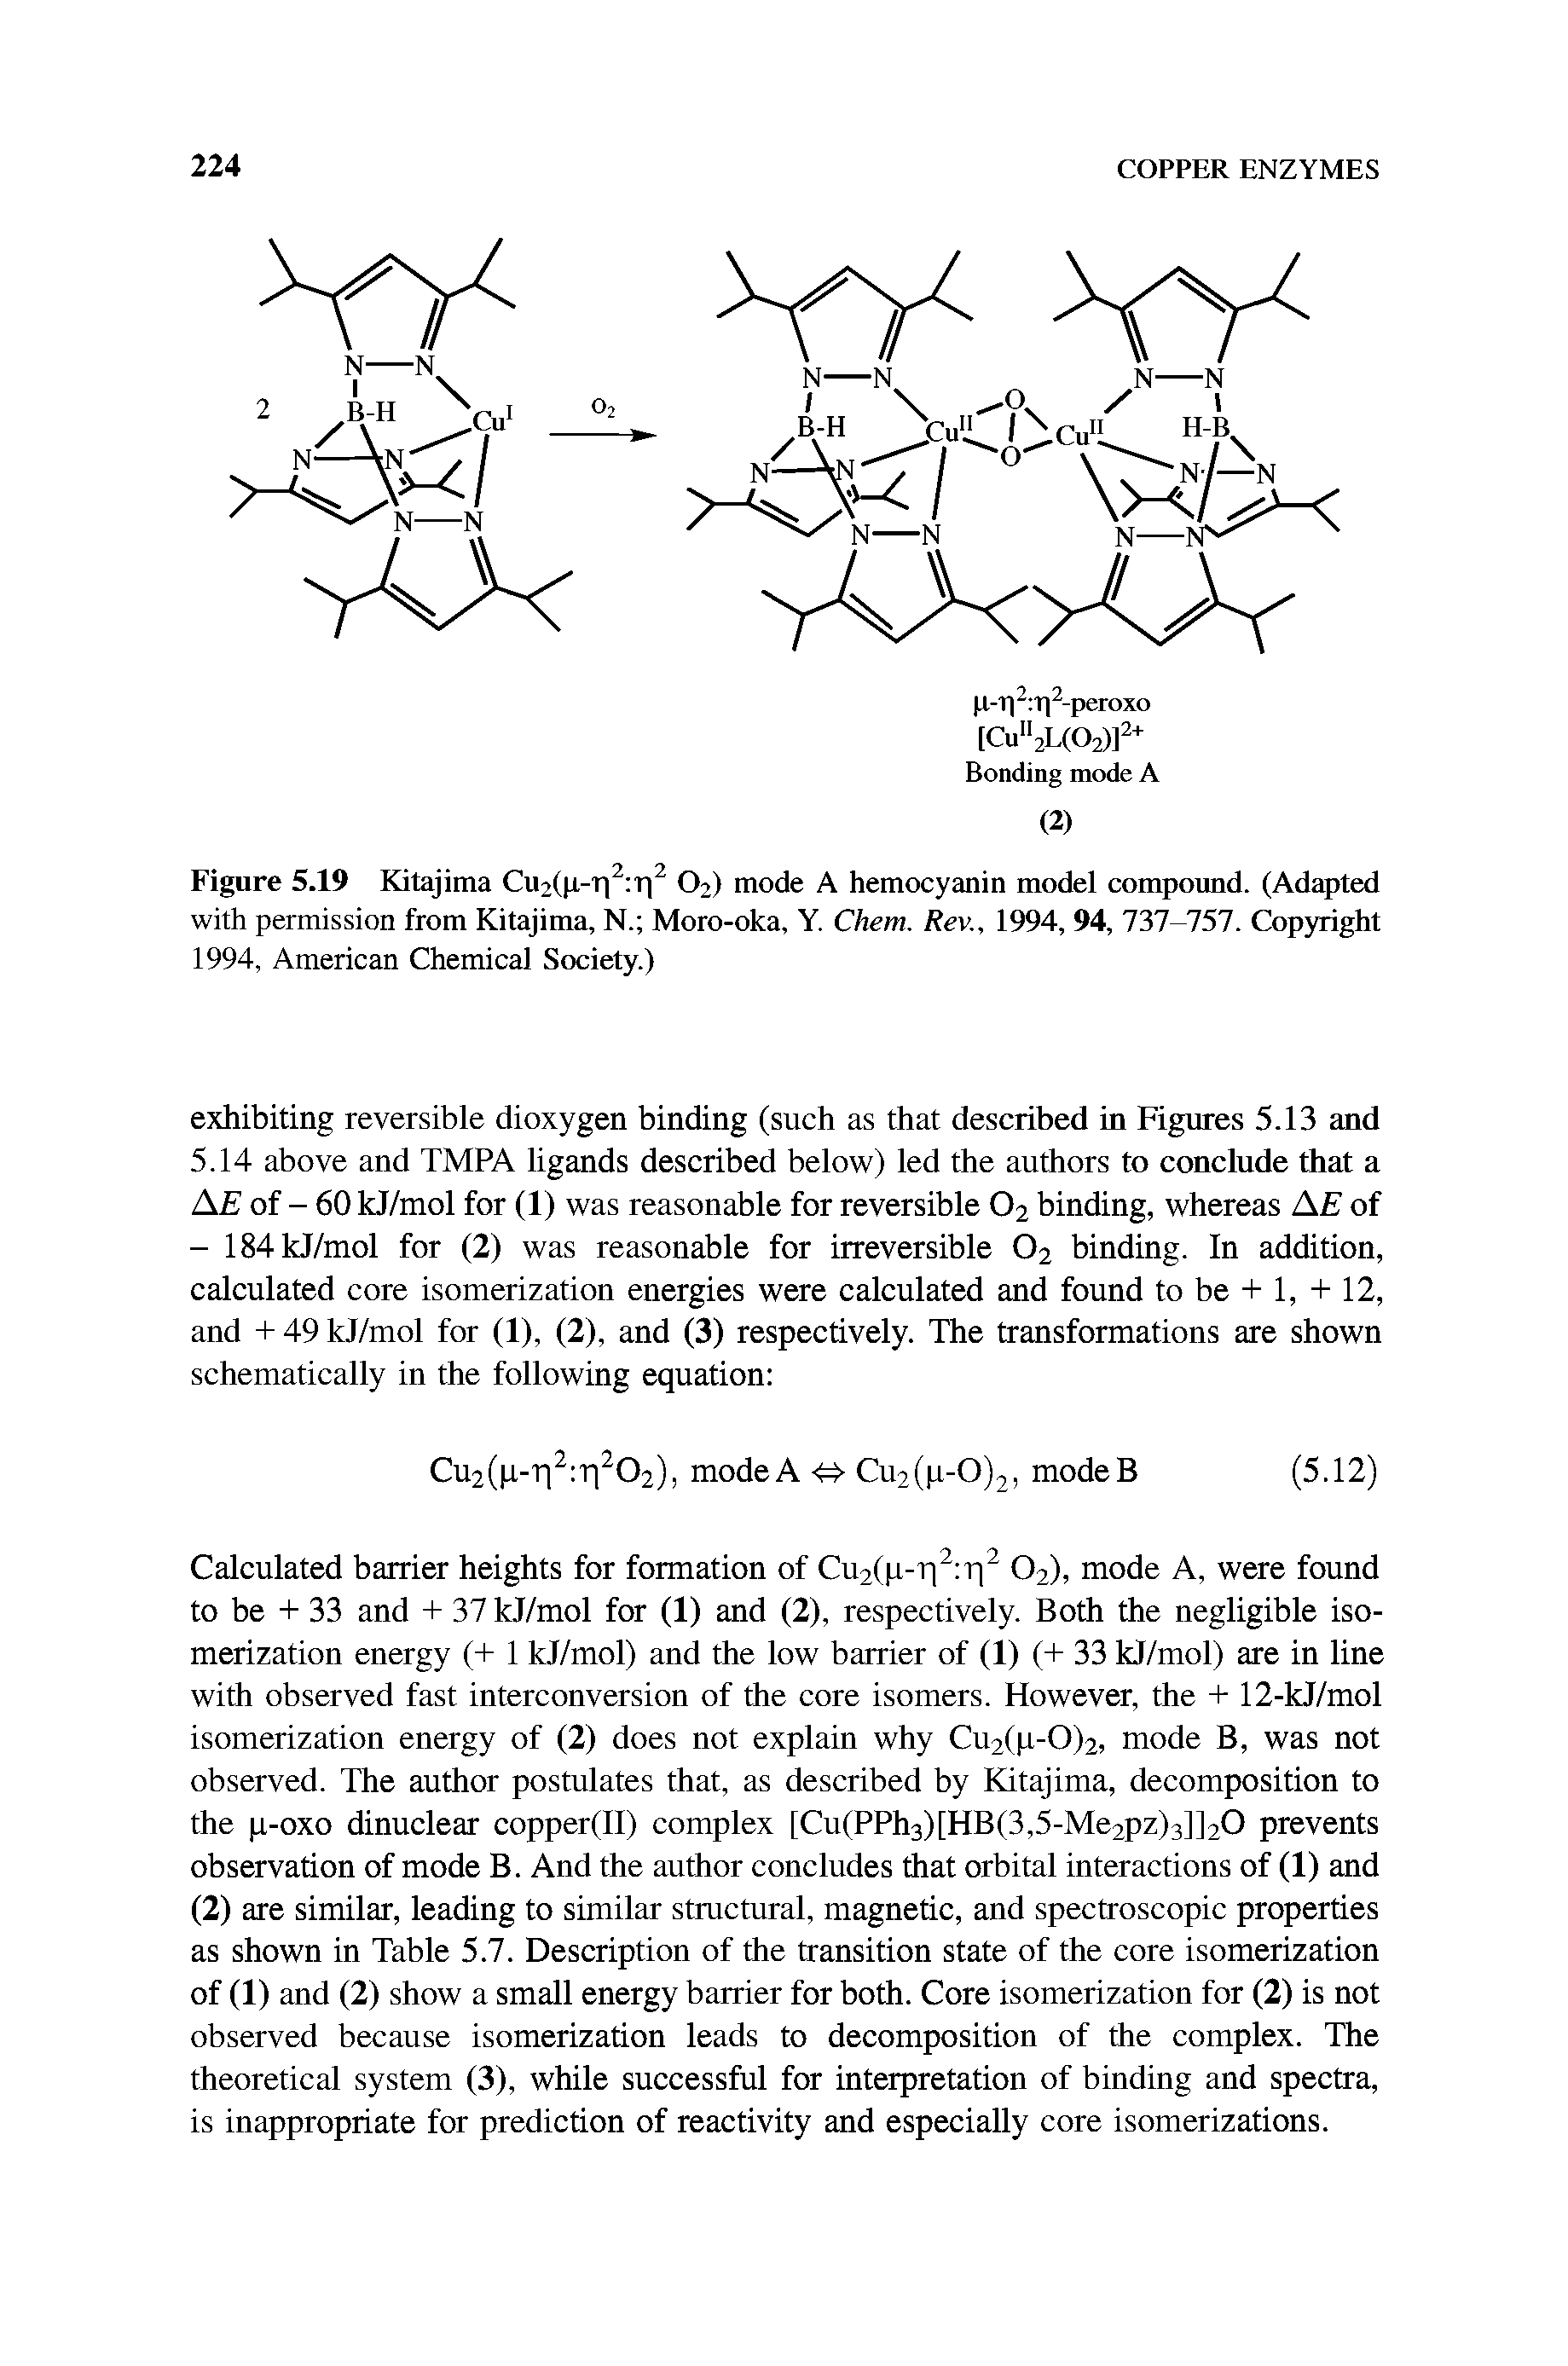 Figure 5.19 Kitajima Cu2(p-r 2 r 2 02) mode A hemocyanin model compound. (Adapted with permission from Kitajima, N. Moro-oka, Y. Chem. Rev., 1994, 94, Til-151. Copyright 1994, American Chemical Society.)...